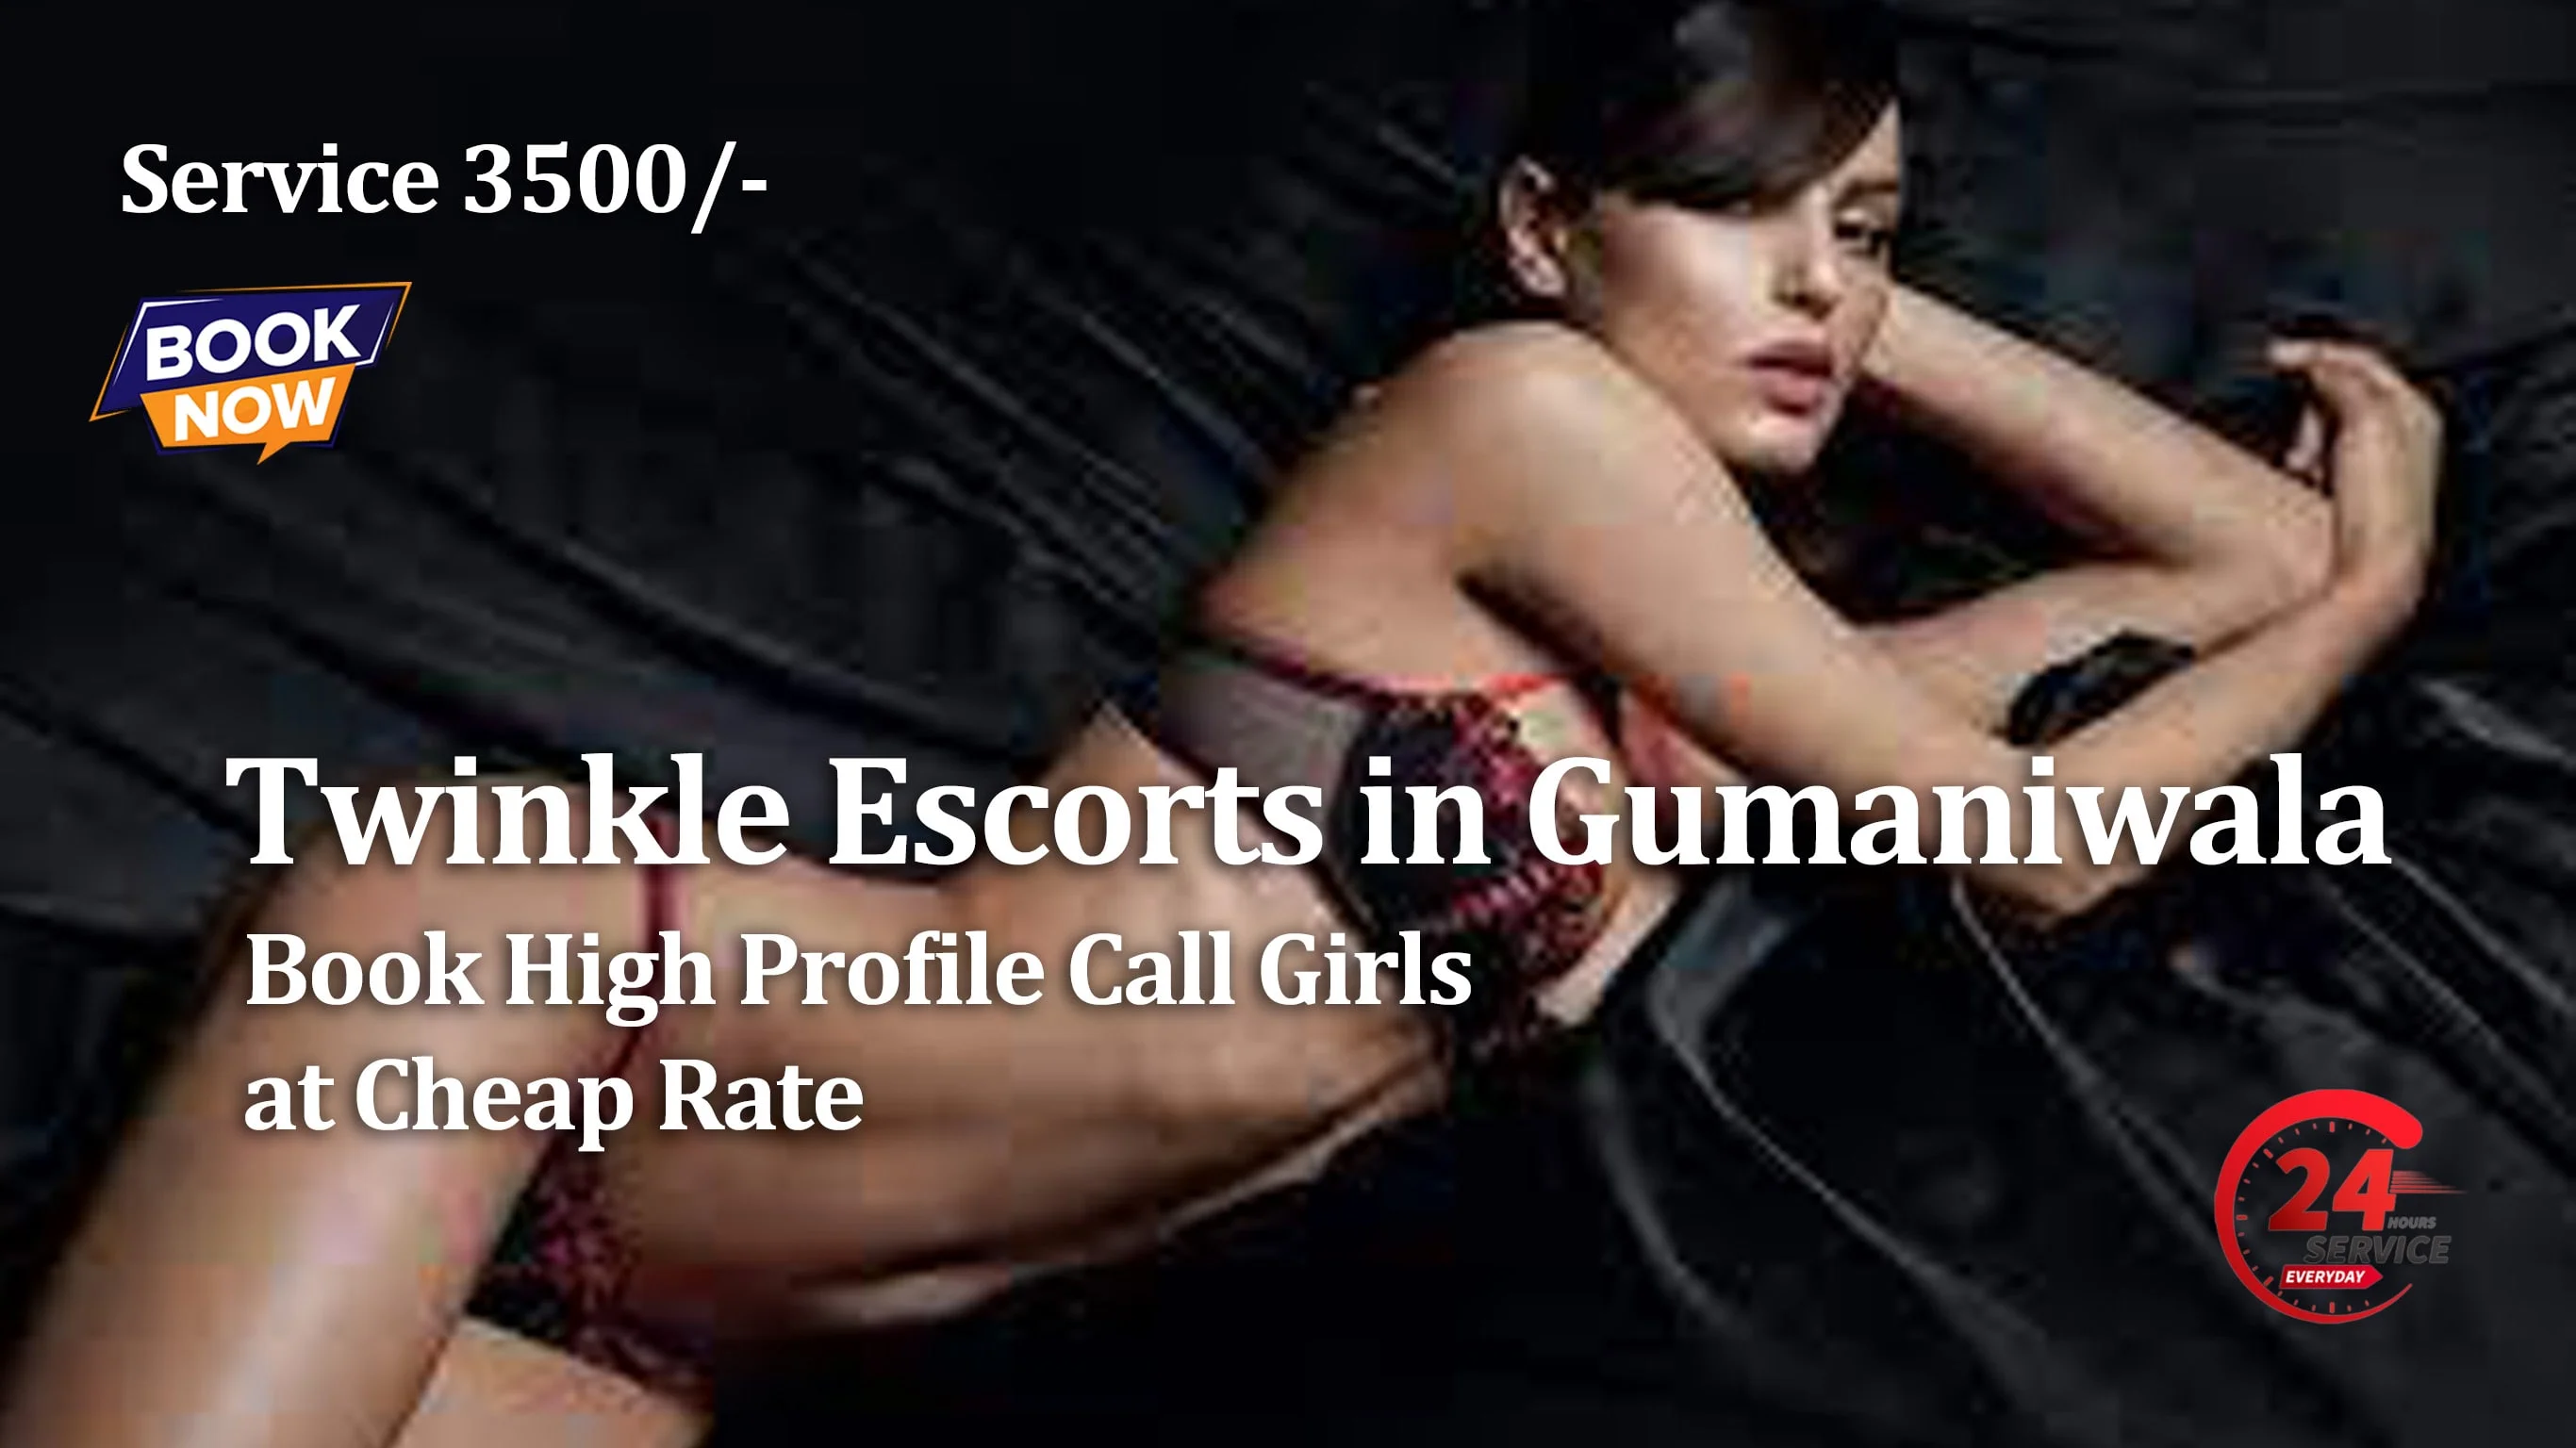 Gumaniwala Escort give description of twinkle escort service charges